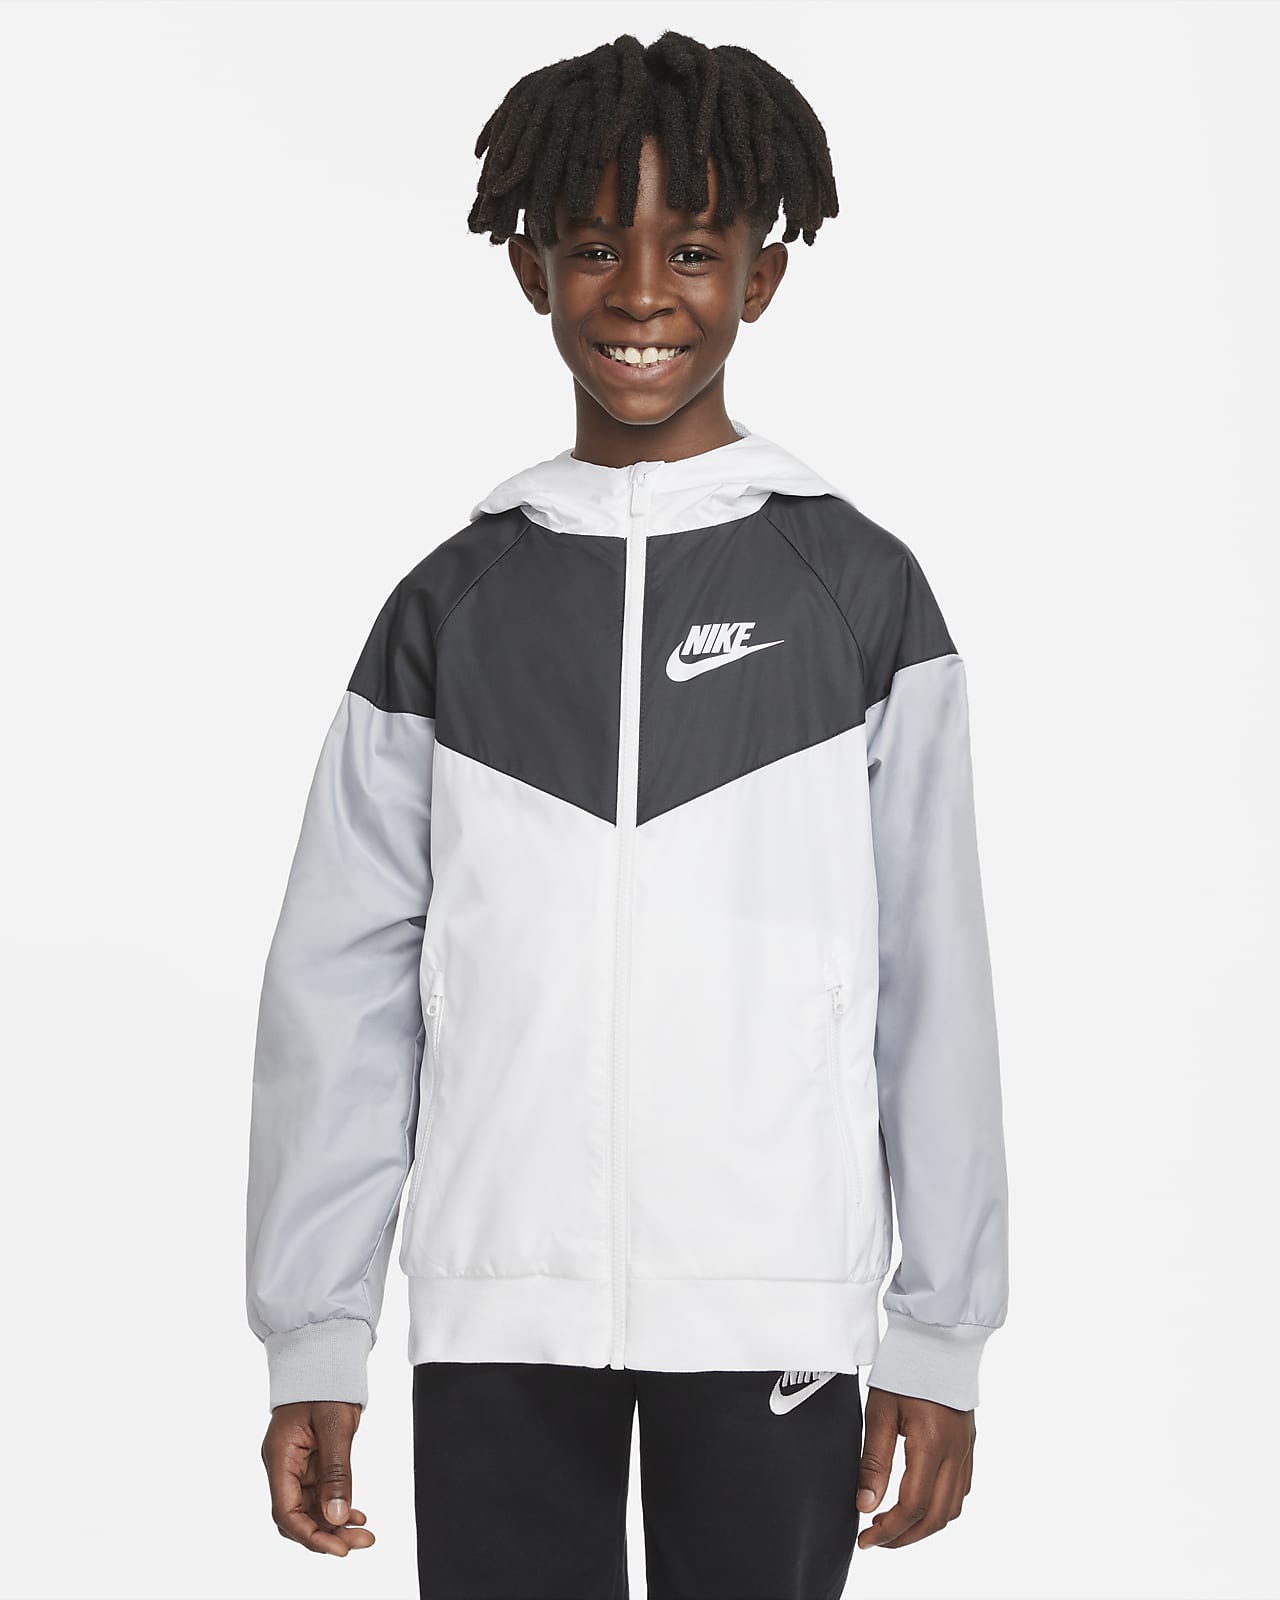 Nike Sportswear Windrunner Chaqueta con capucha holgada con longitud hasta la cadera - Niño